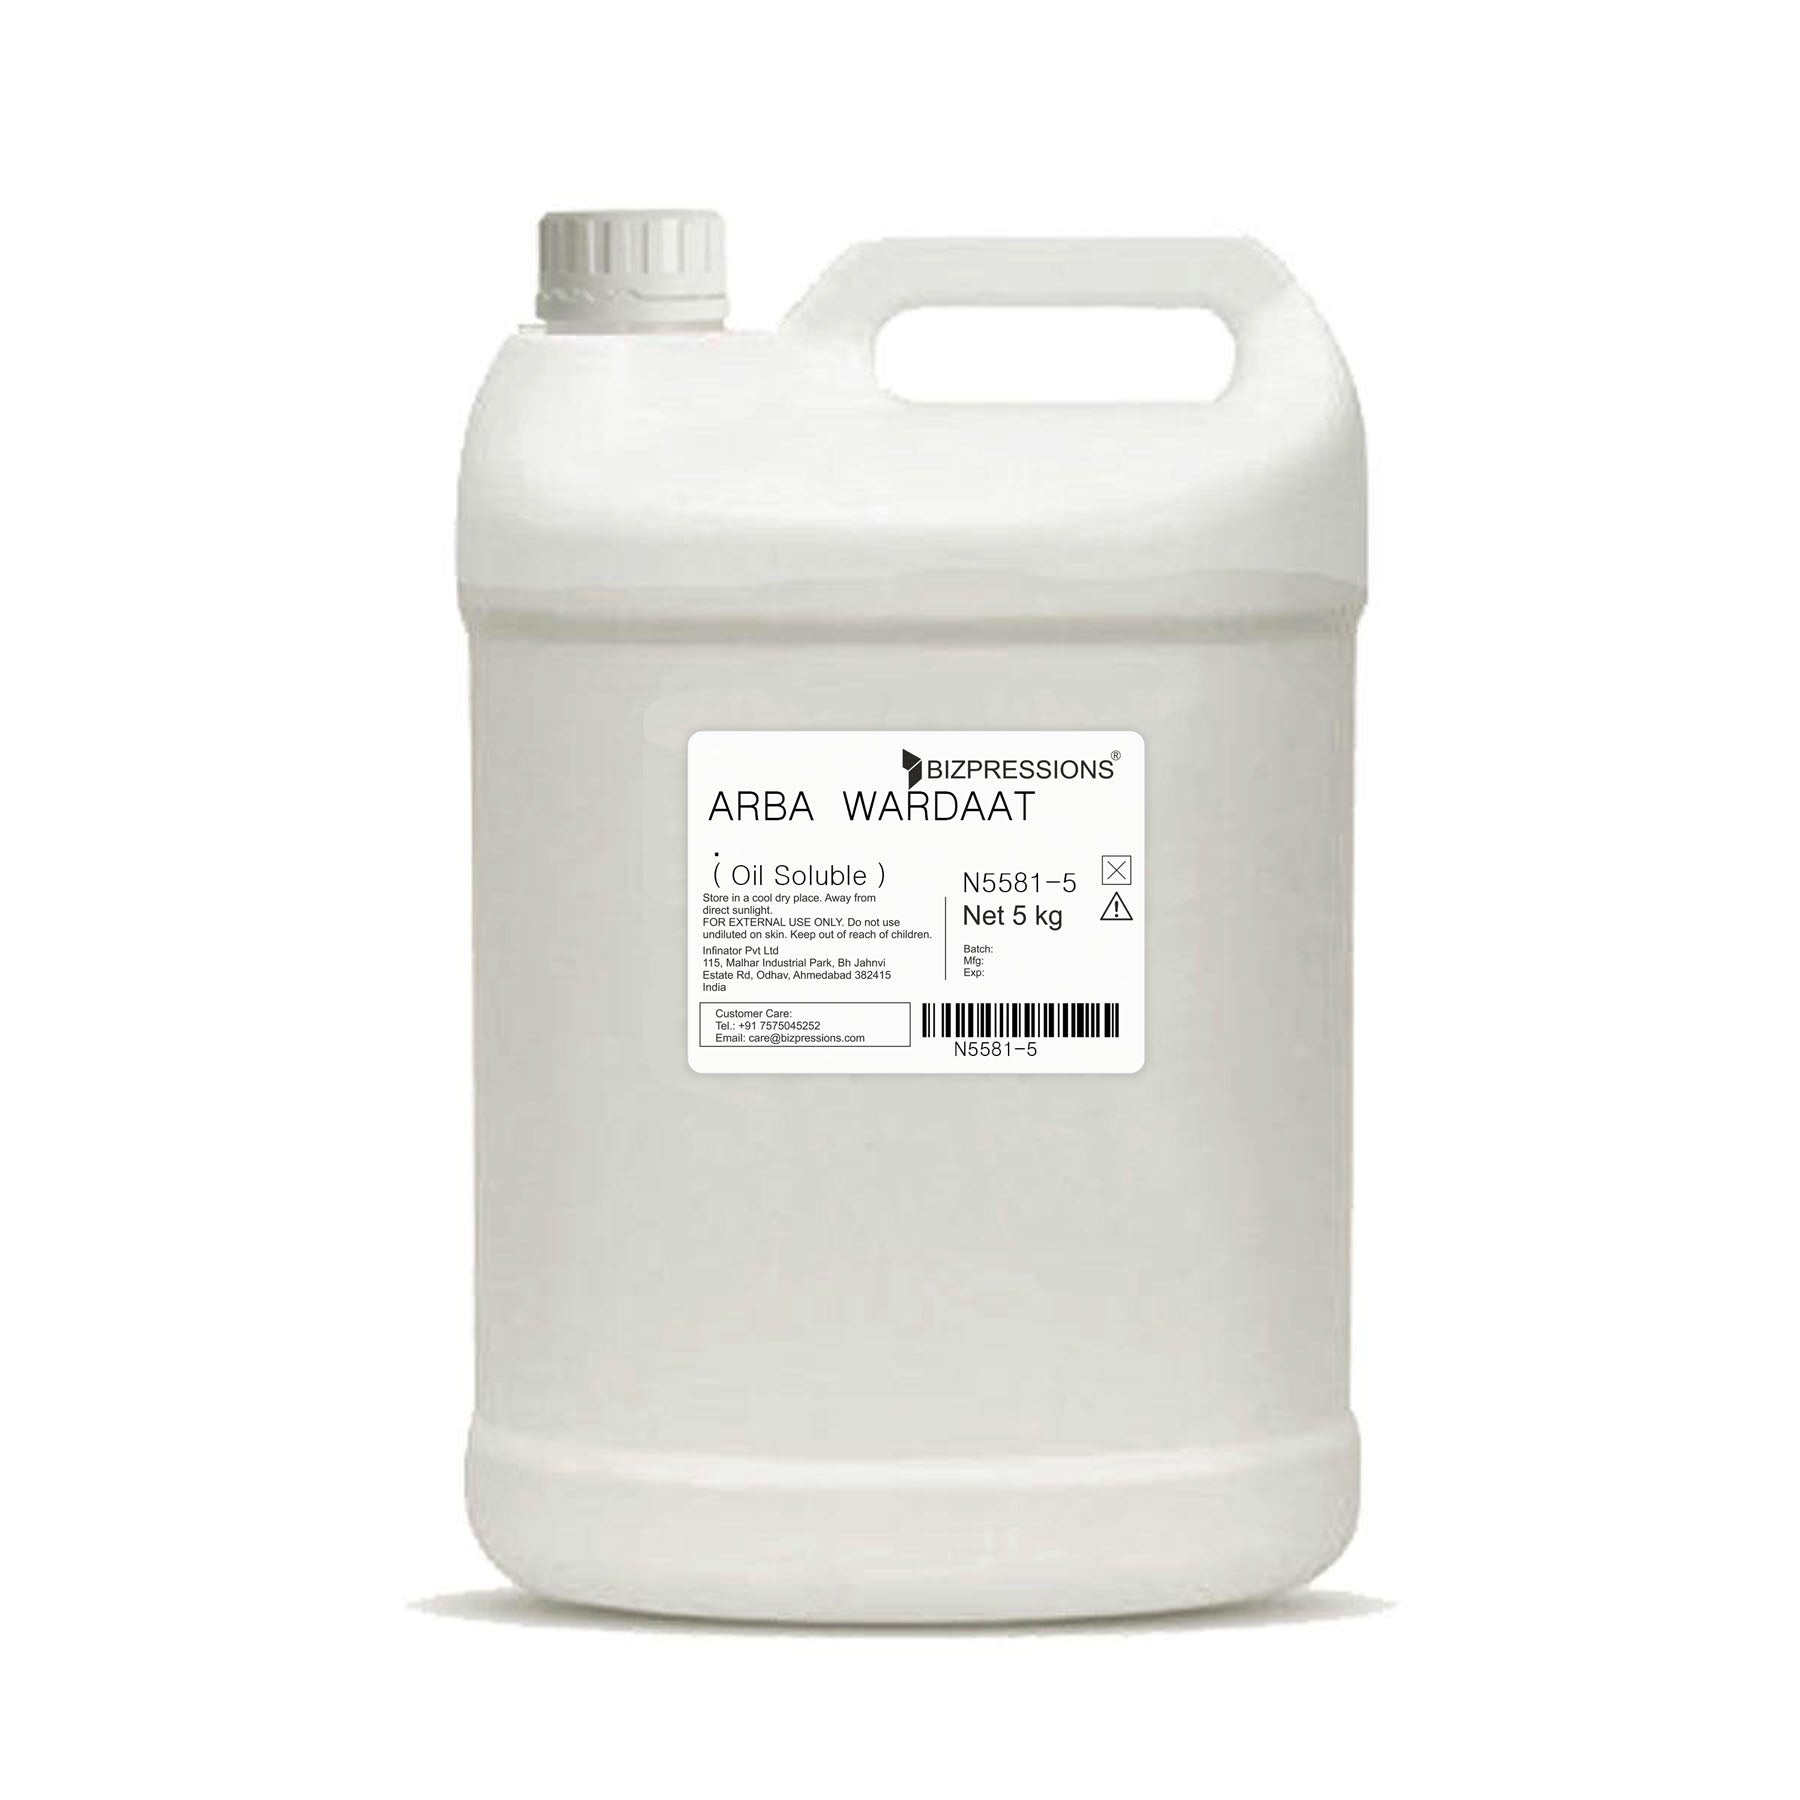 ARBA WARDAAT - Fragrance ( Oil Soluble ) - 5 kg